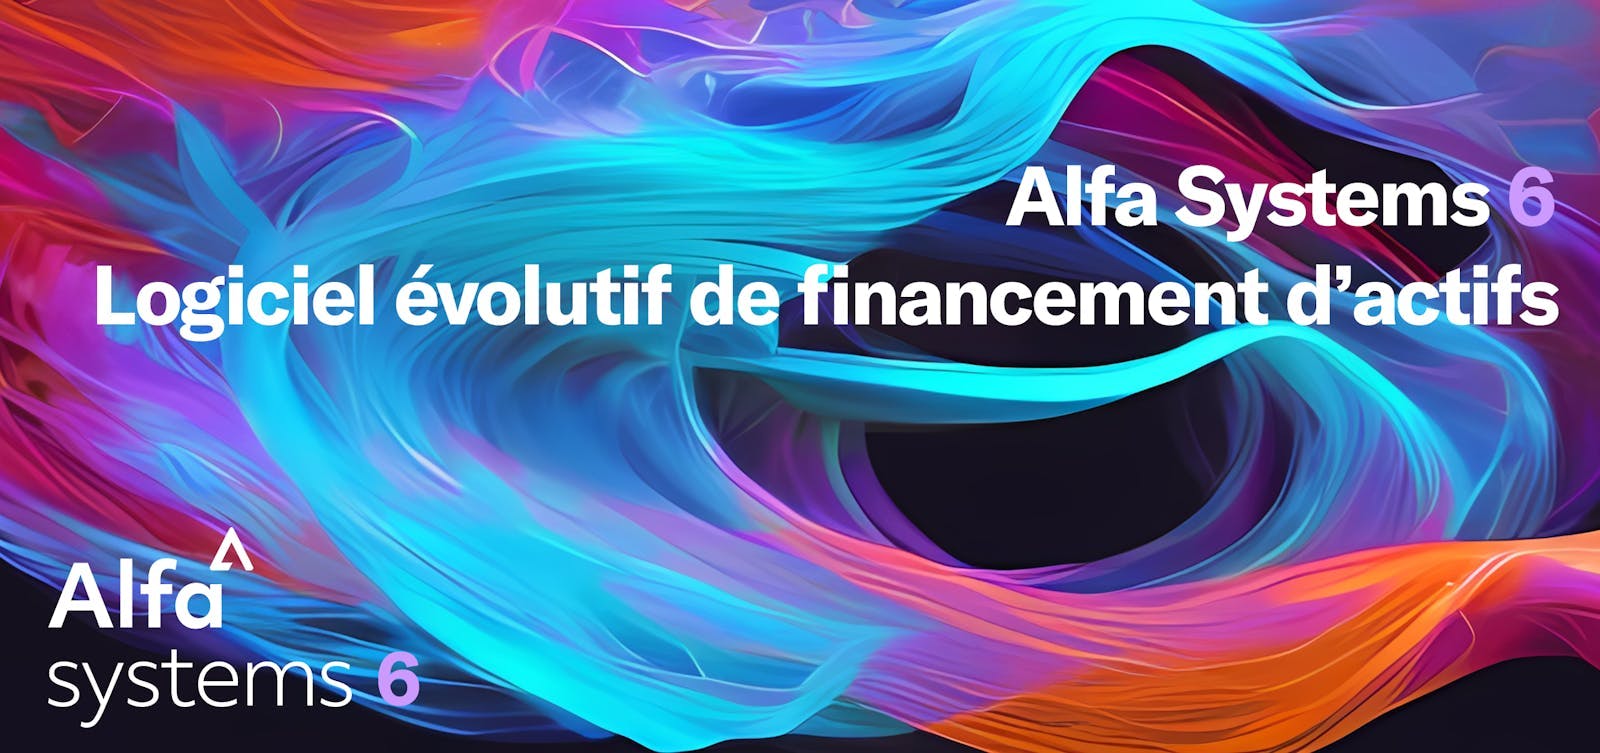 Alfa Systems 6: Logiciel évolutif de financement d’actifs